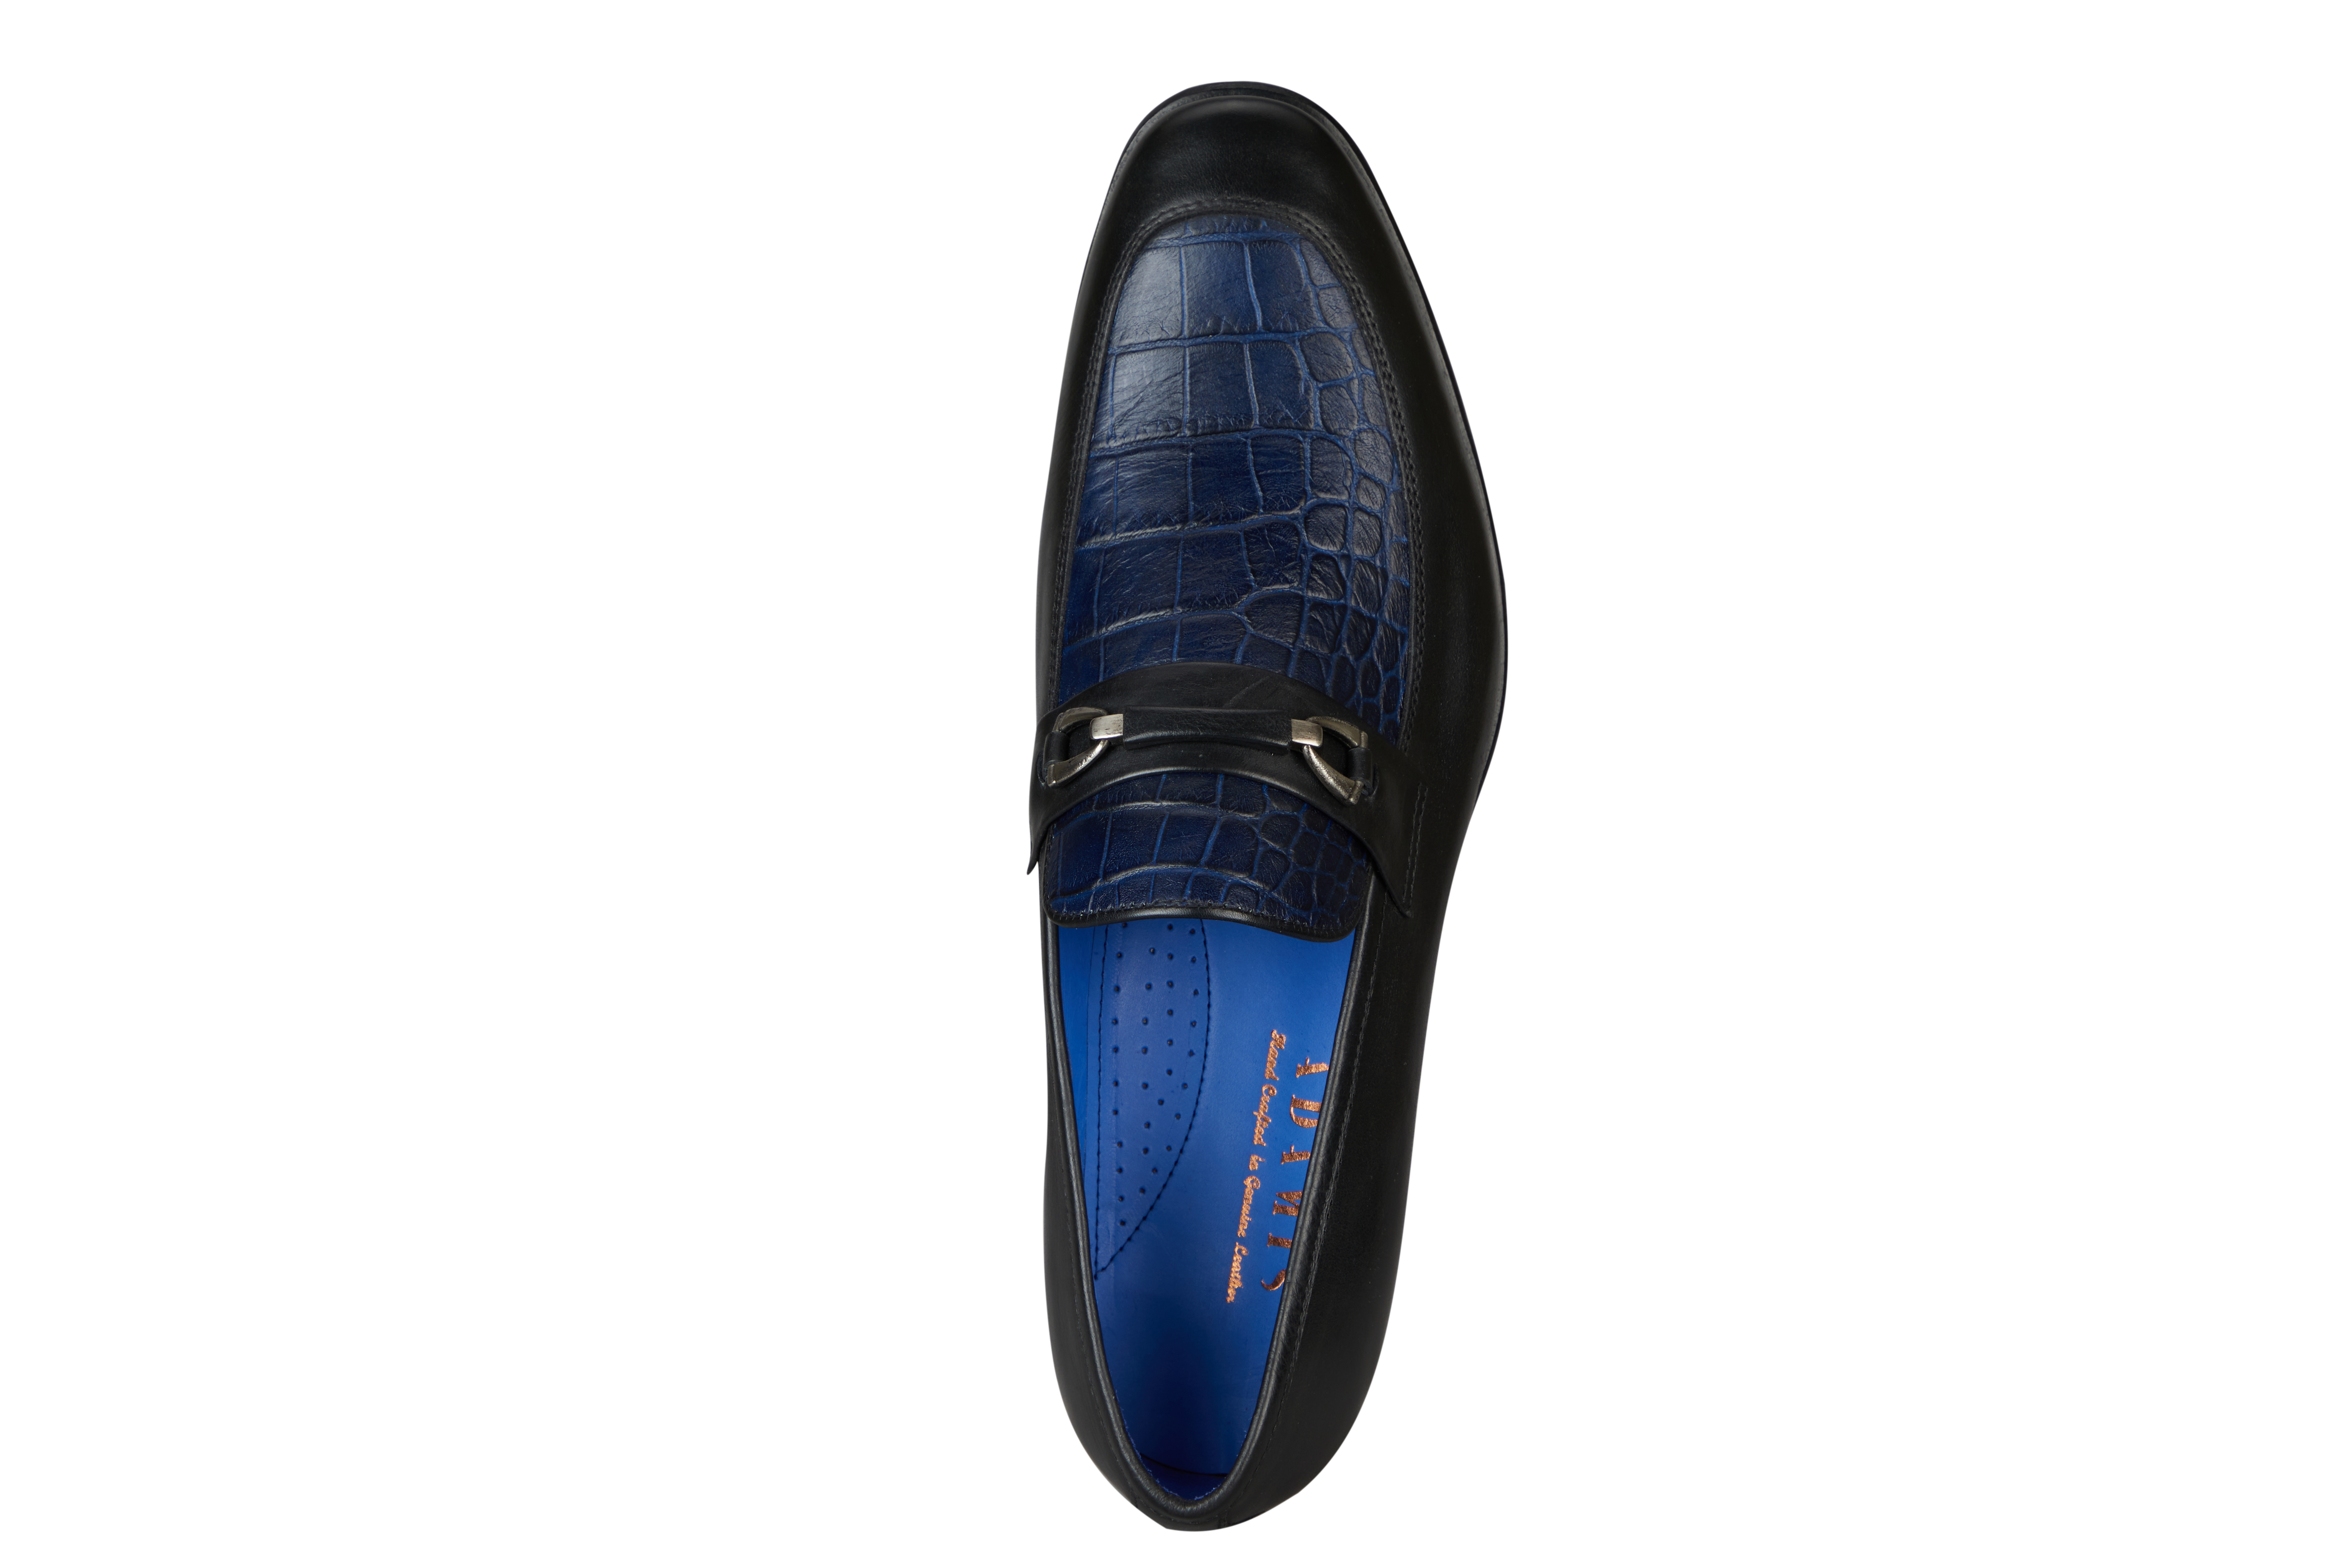 PF52-Adamis Pure Leather Footwear For Men- - Black/Blue